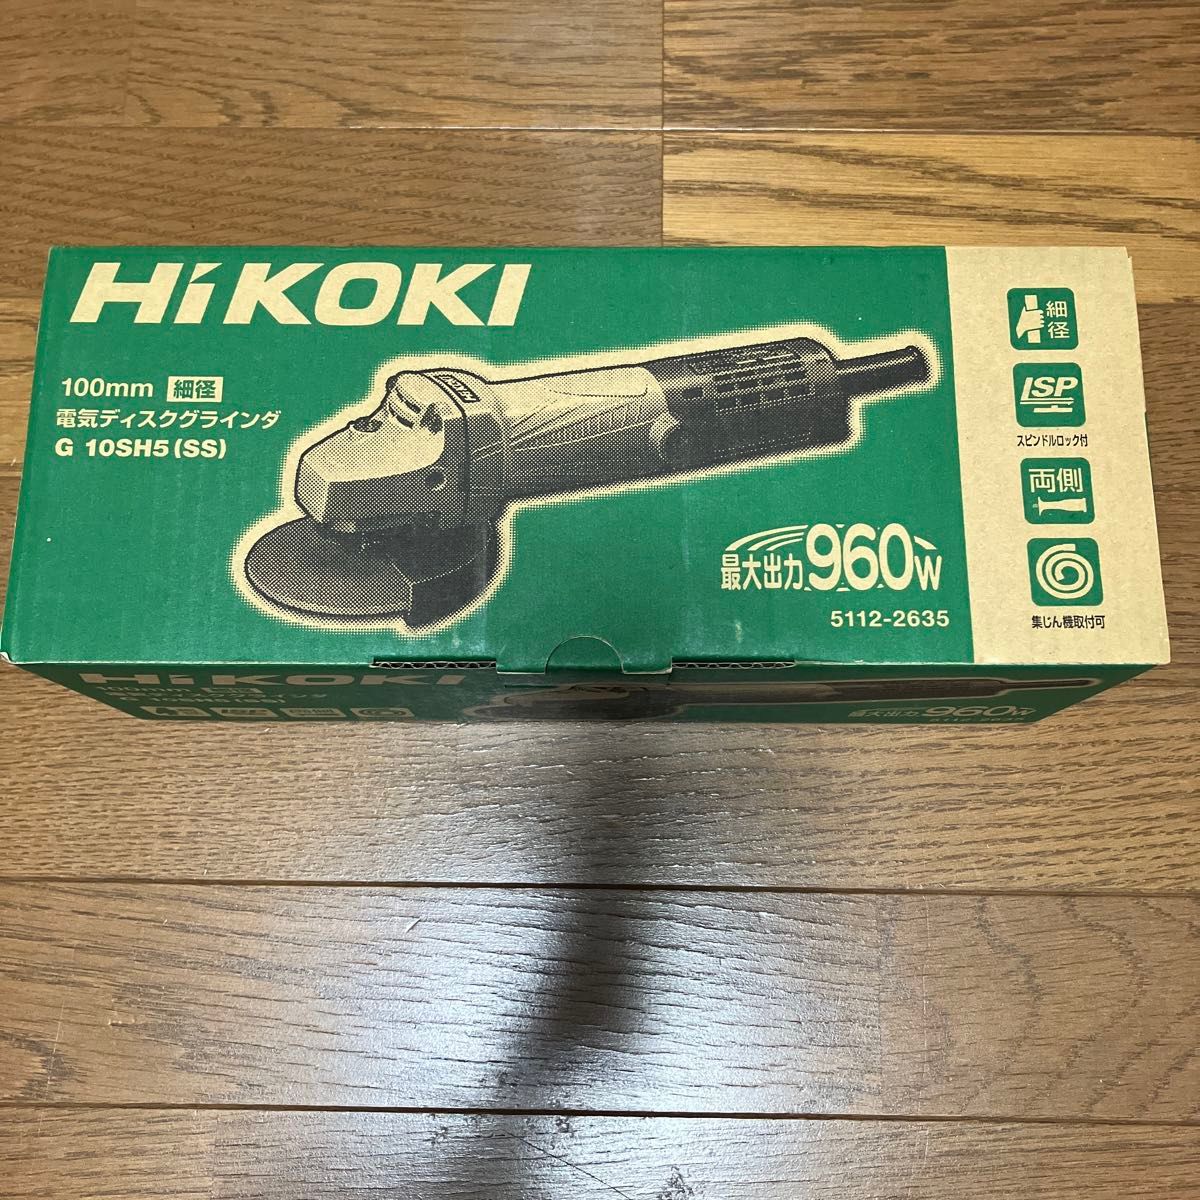 HiKOKI ハイコーキ 電気ディスクグラインダ G 10SH5 100mm 細径